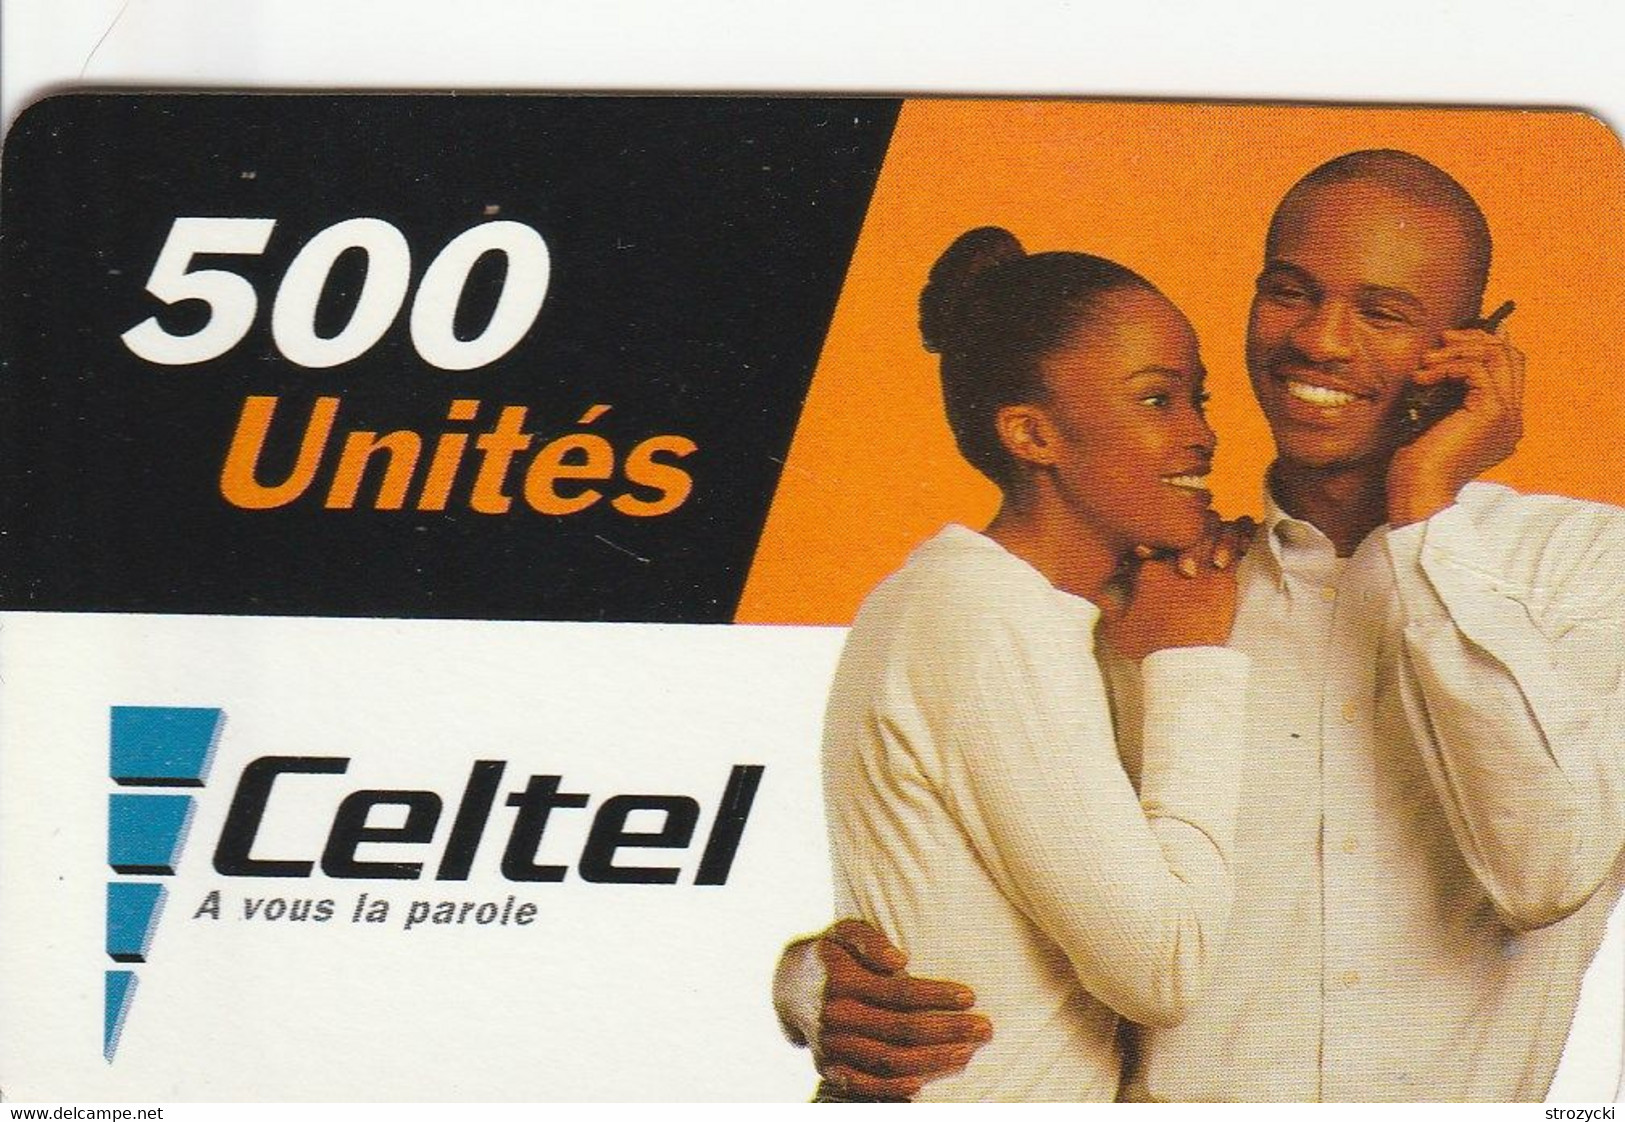 Congo (Kinshasa)- Celtel - Couple At The Phone (31/12/2003) - Kongo